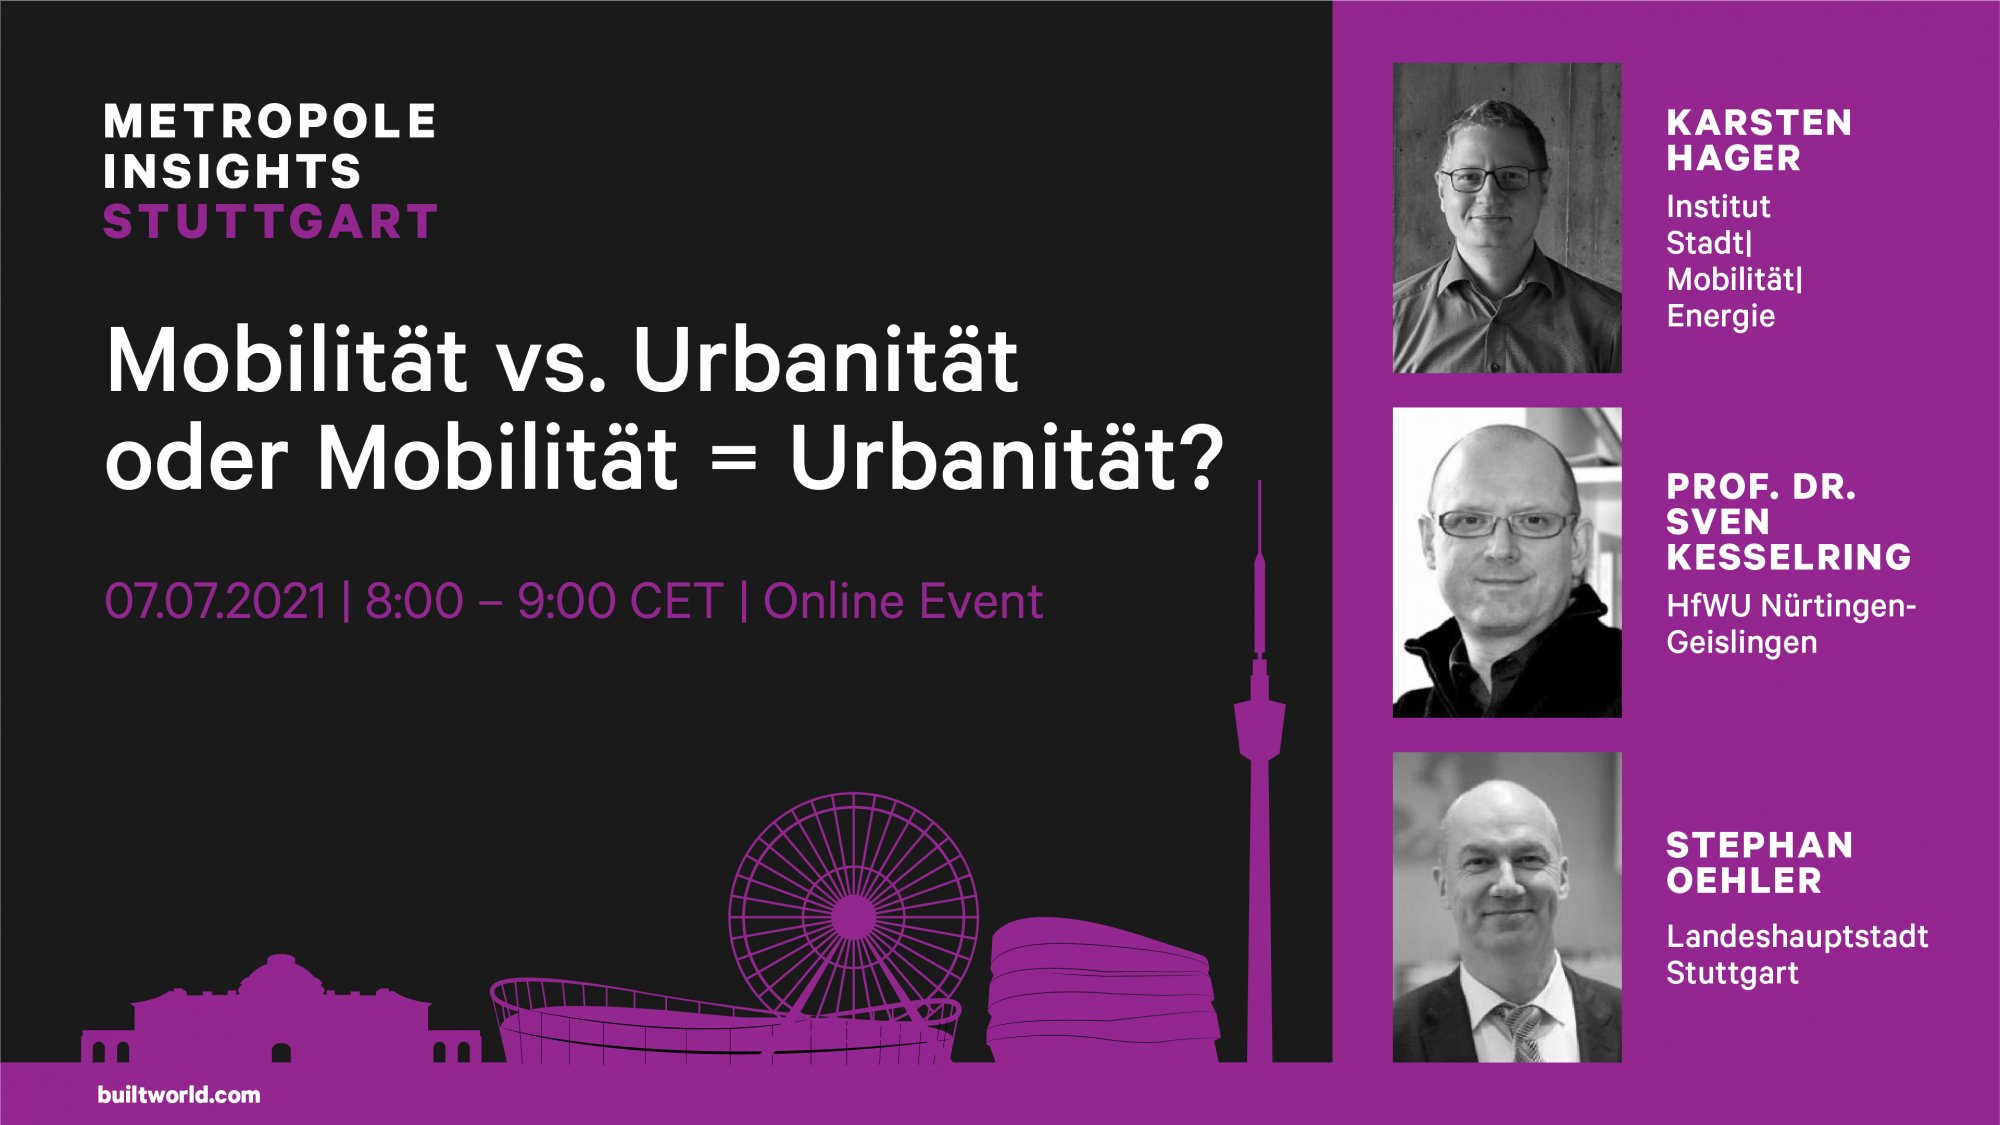 metropole-insights-stuttgart-mobilitaet-urbanitaet